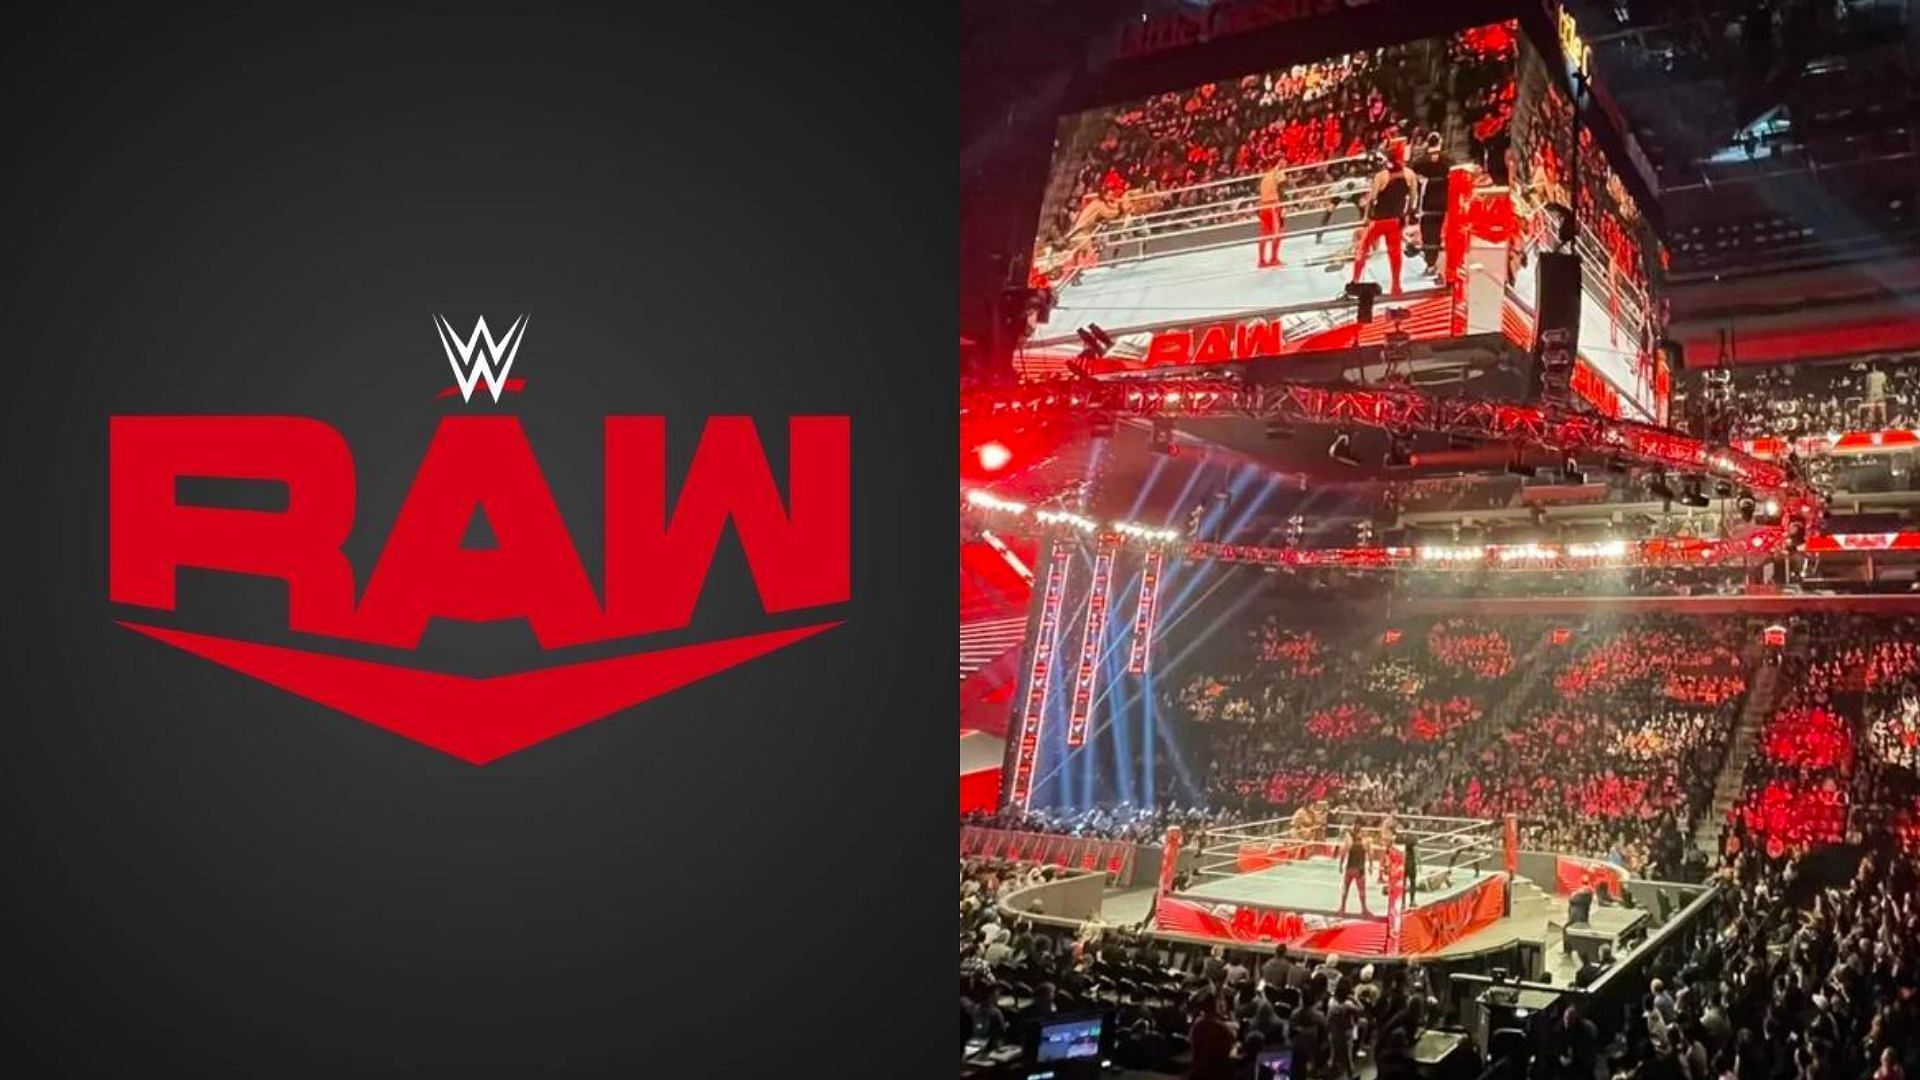 WWE WrestleMania will air this weekend in Los Angeles. 